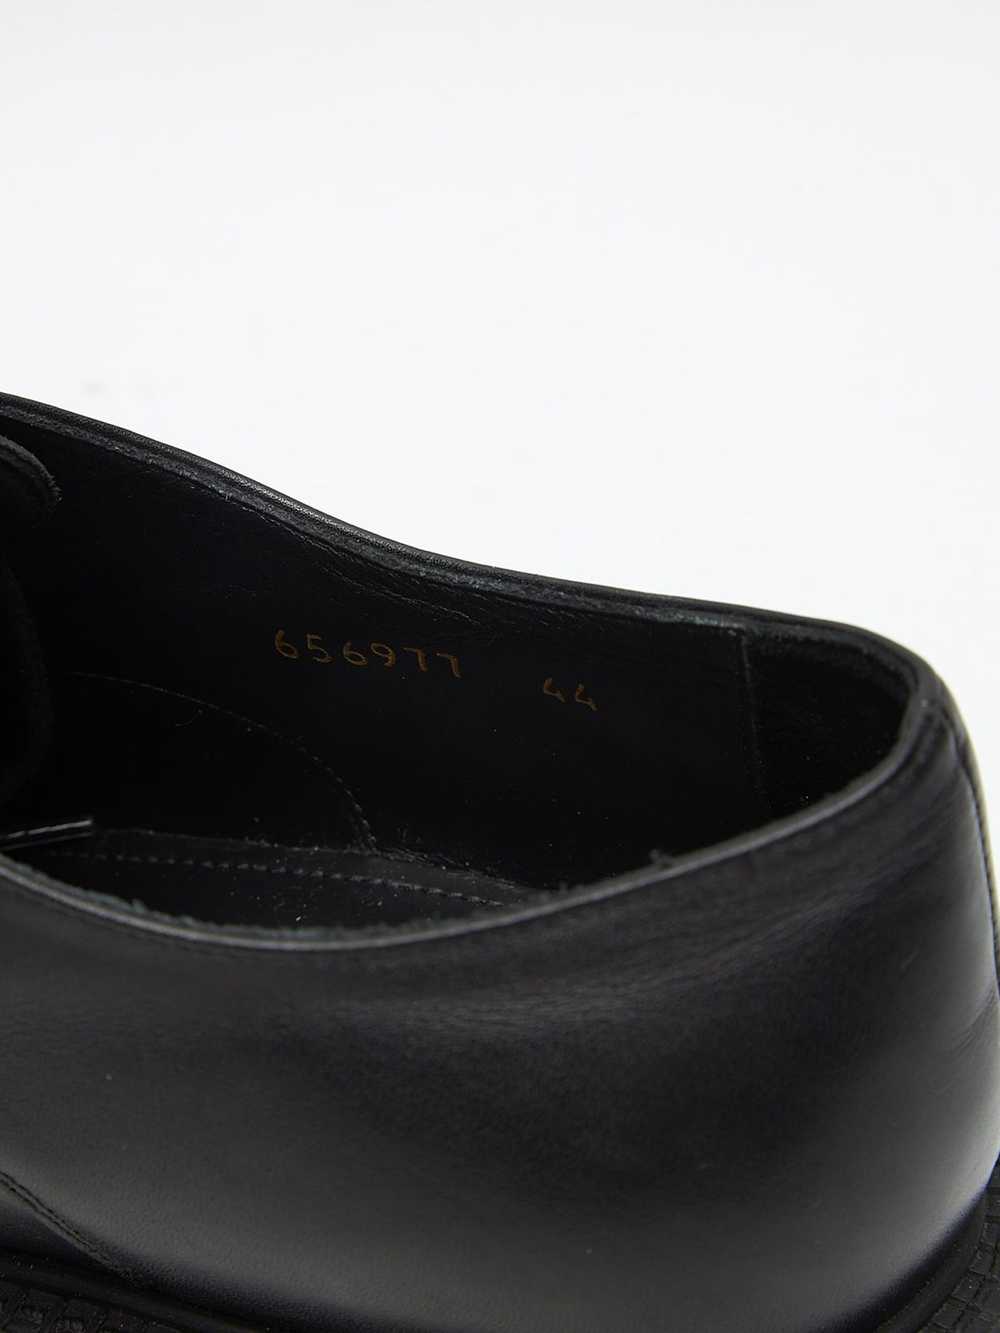 Balenciaga Black Rhino Leather Derby Shoes - image 7